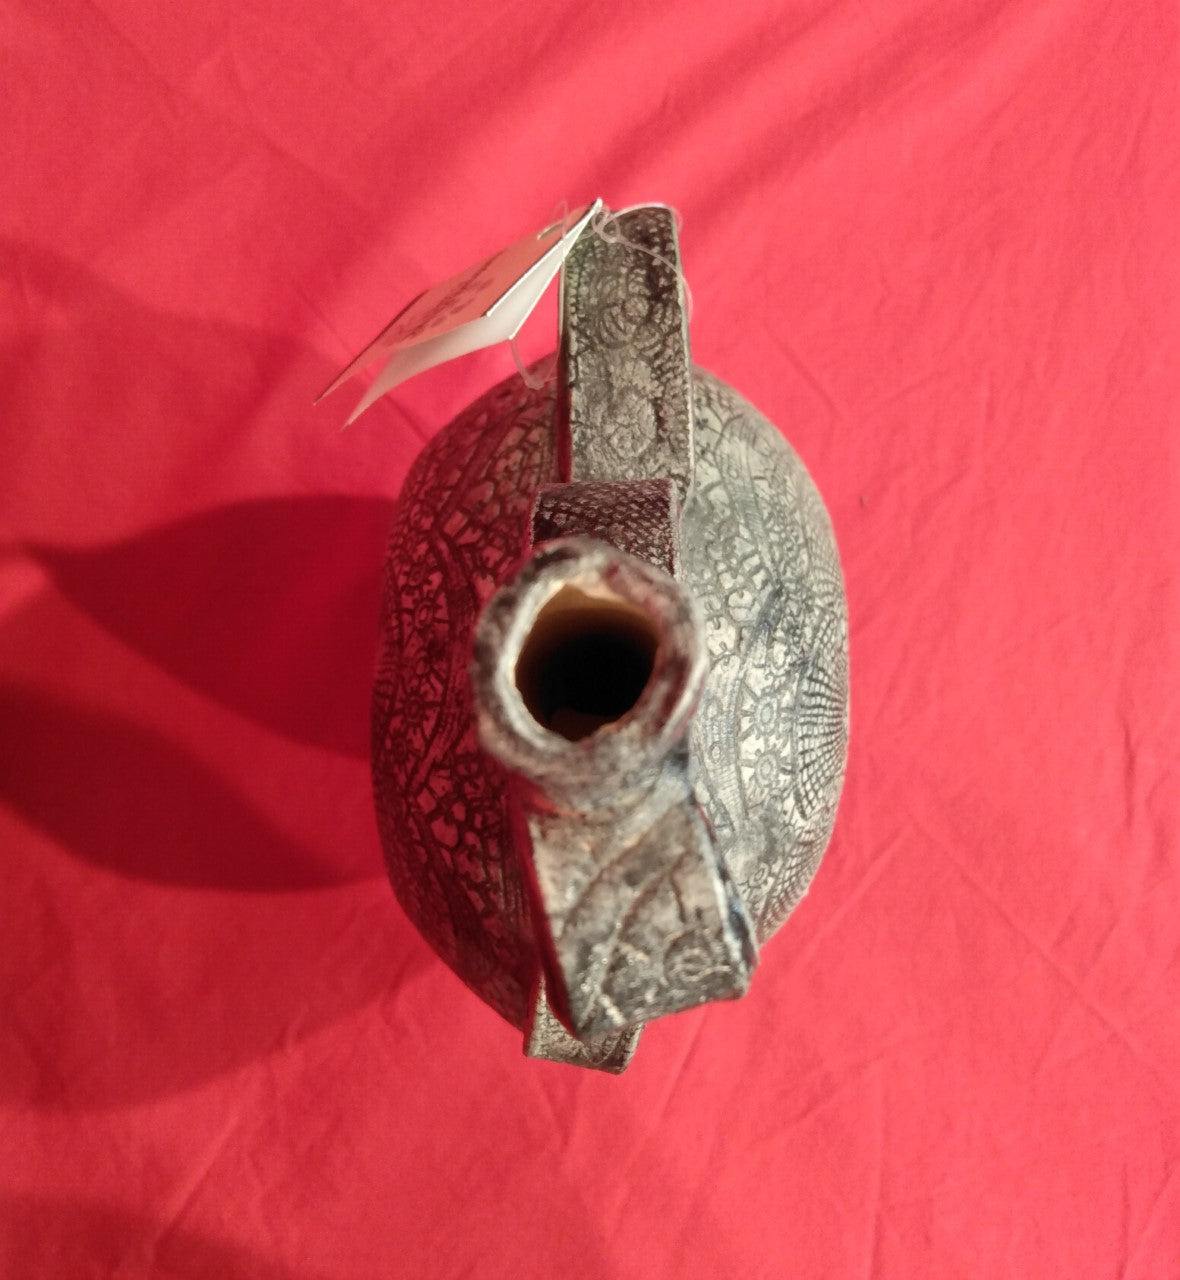 Handmade Pottery Vase by SUNILA- N.C. Local Artist